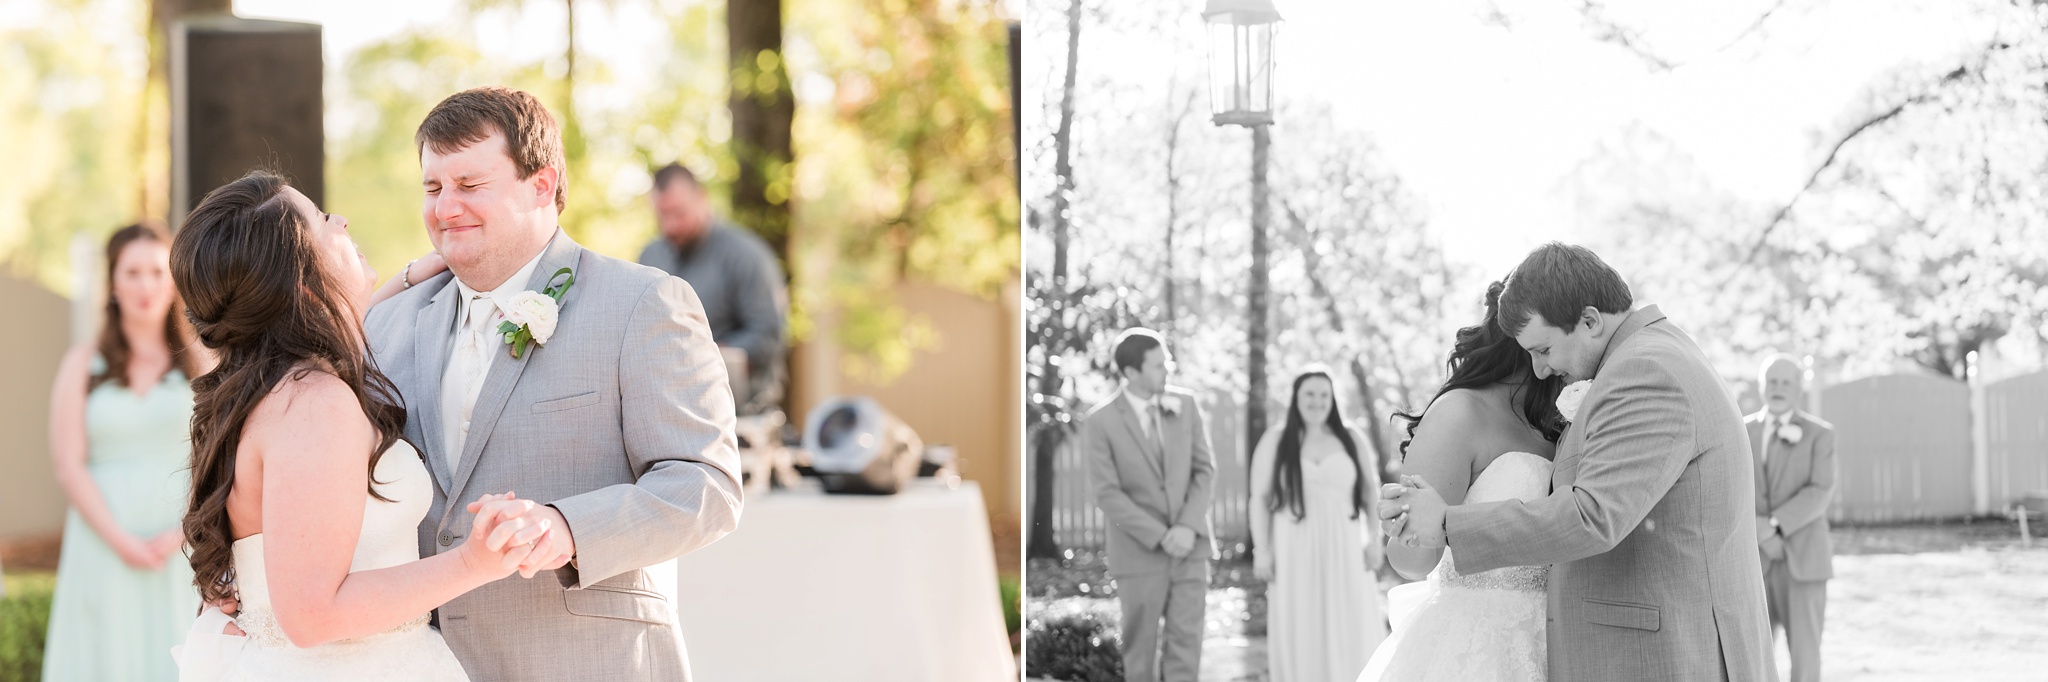 Aqua and Teal Spring Garden Wedding | Birmingham Alabama Wedding Photographers_0103.jpg